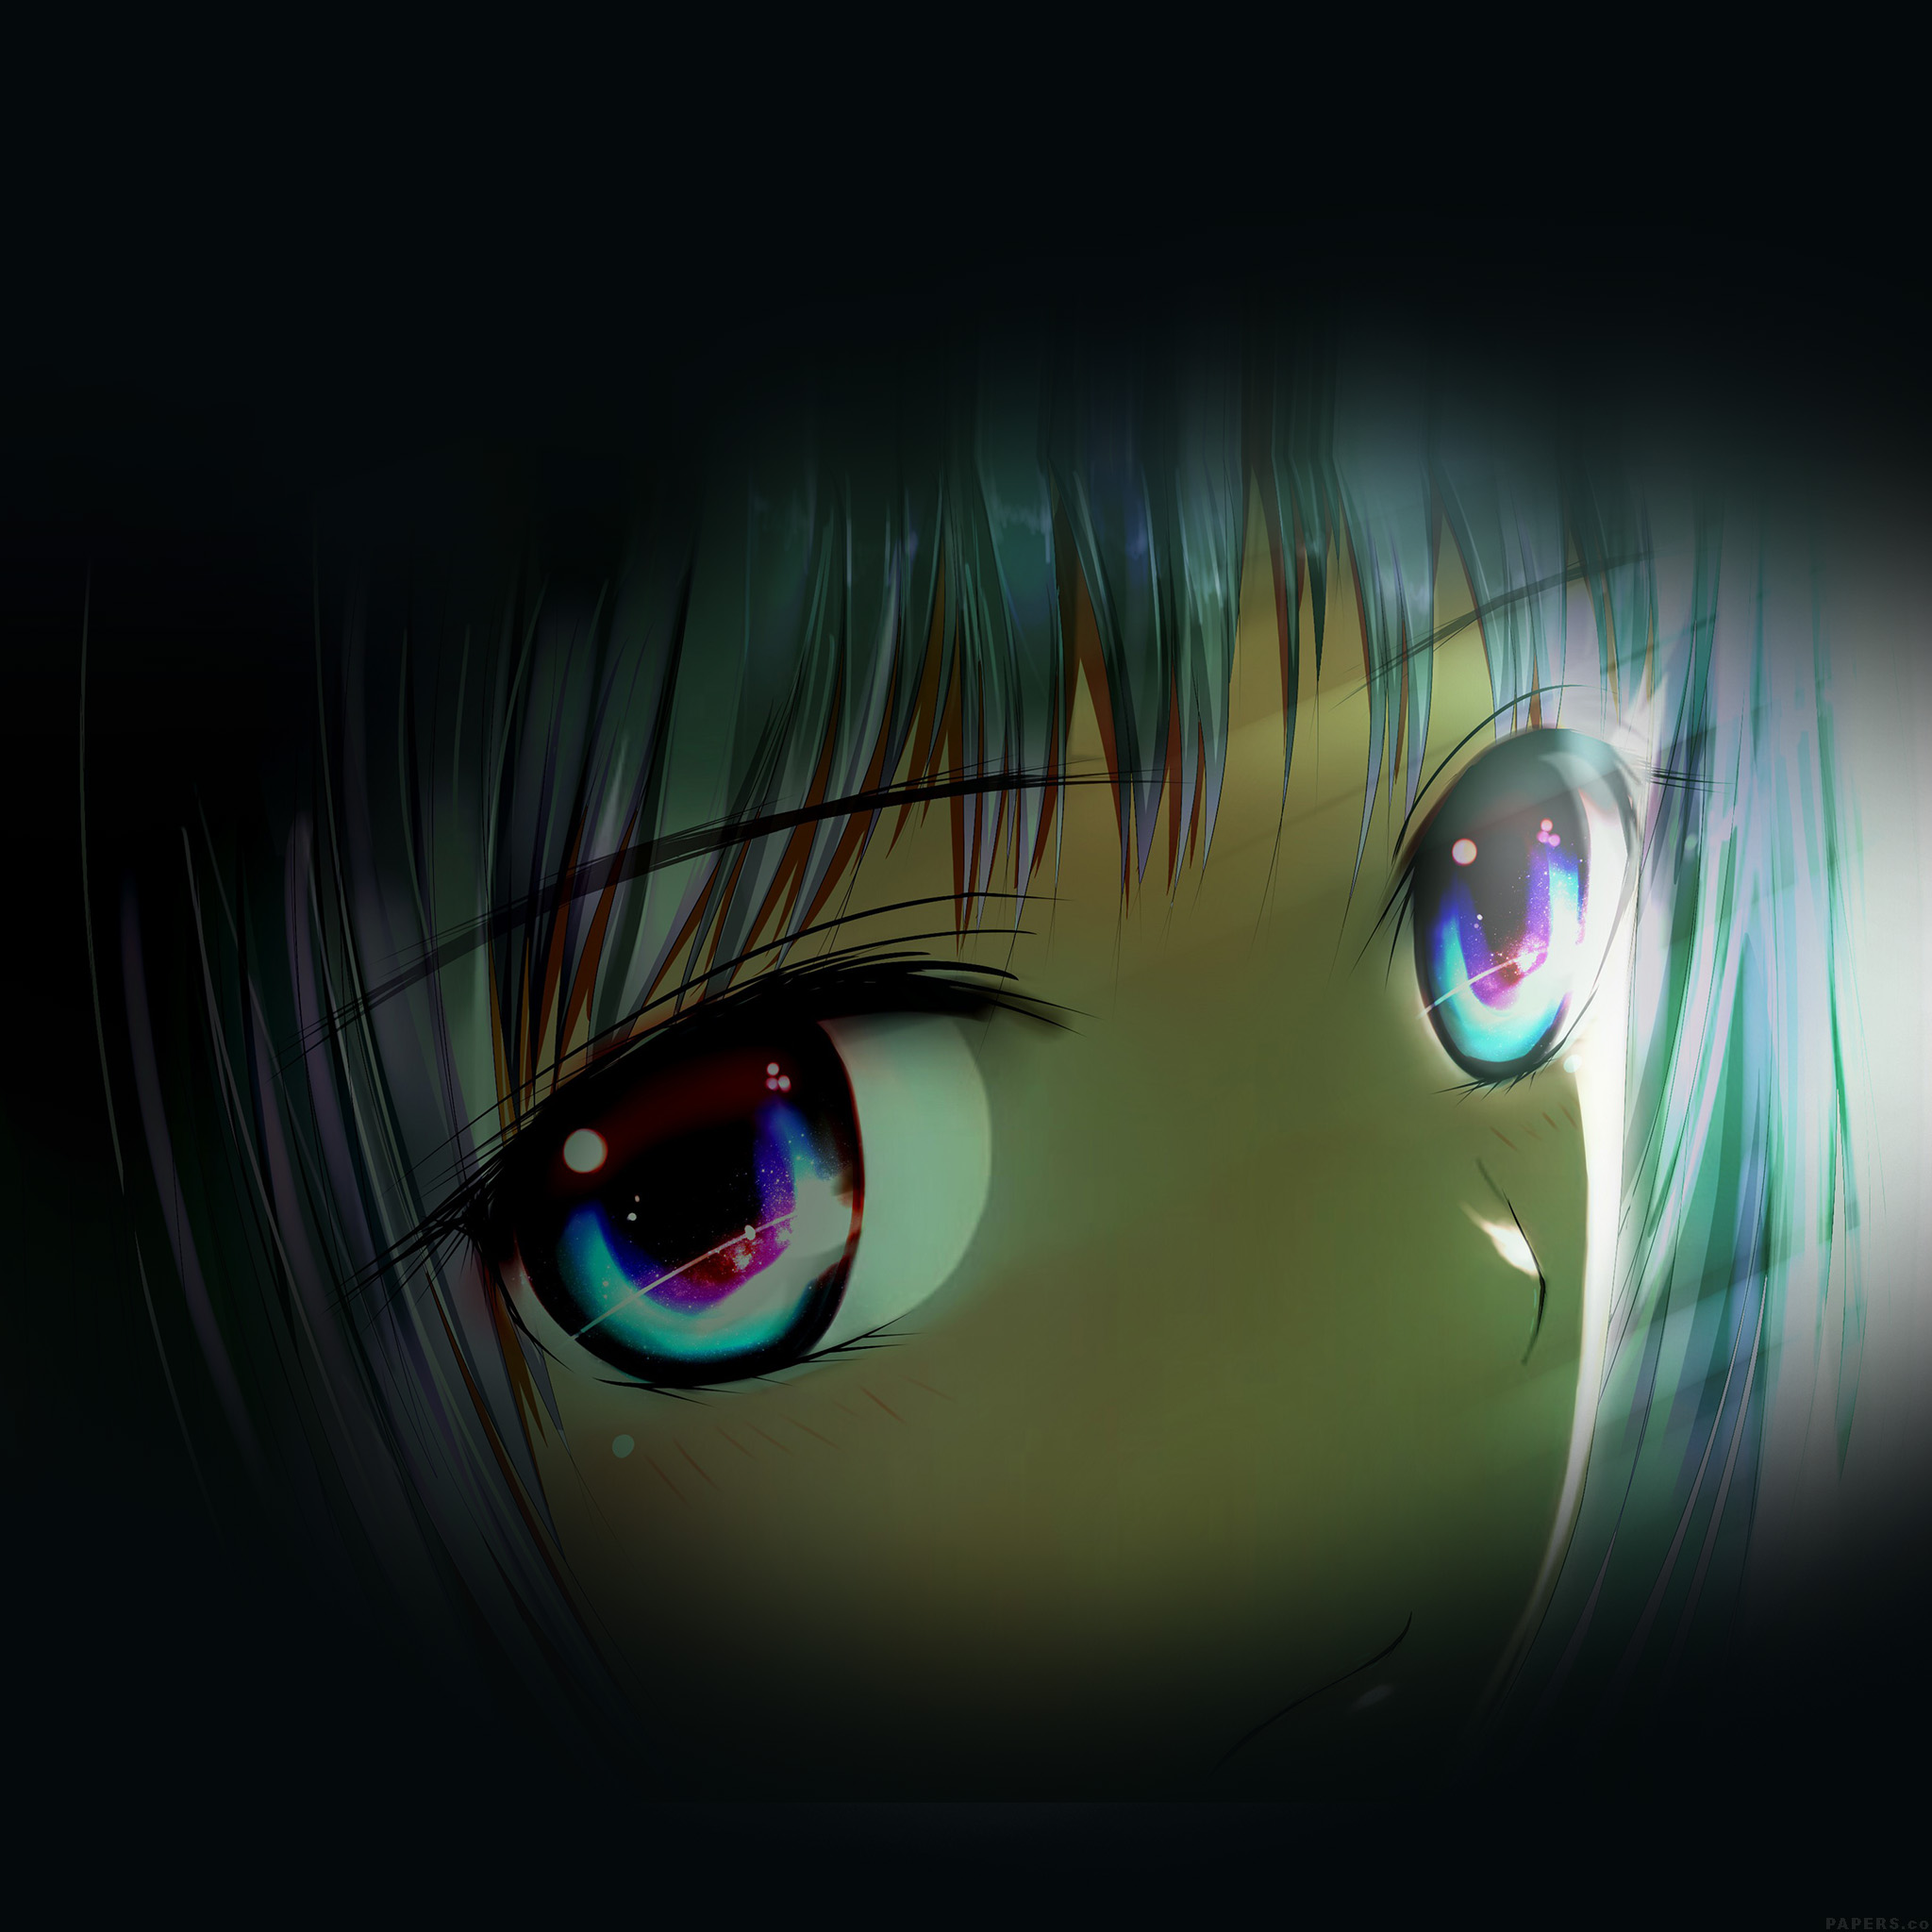 anime wallpaper for ipad,green,eye,blue,darkness,organ